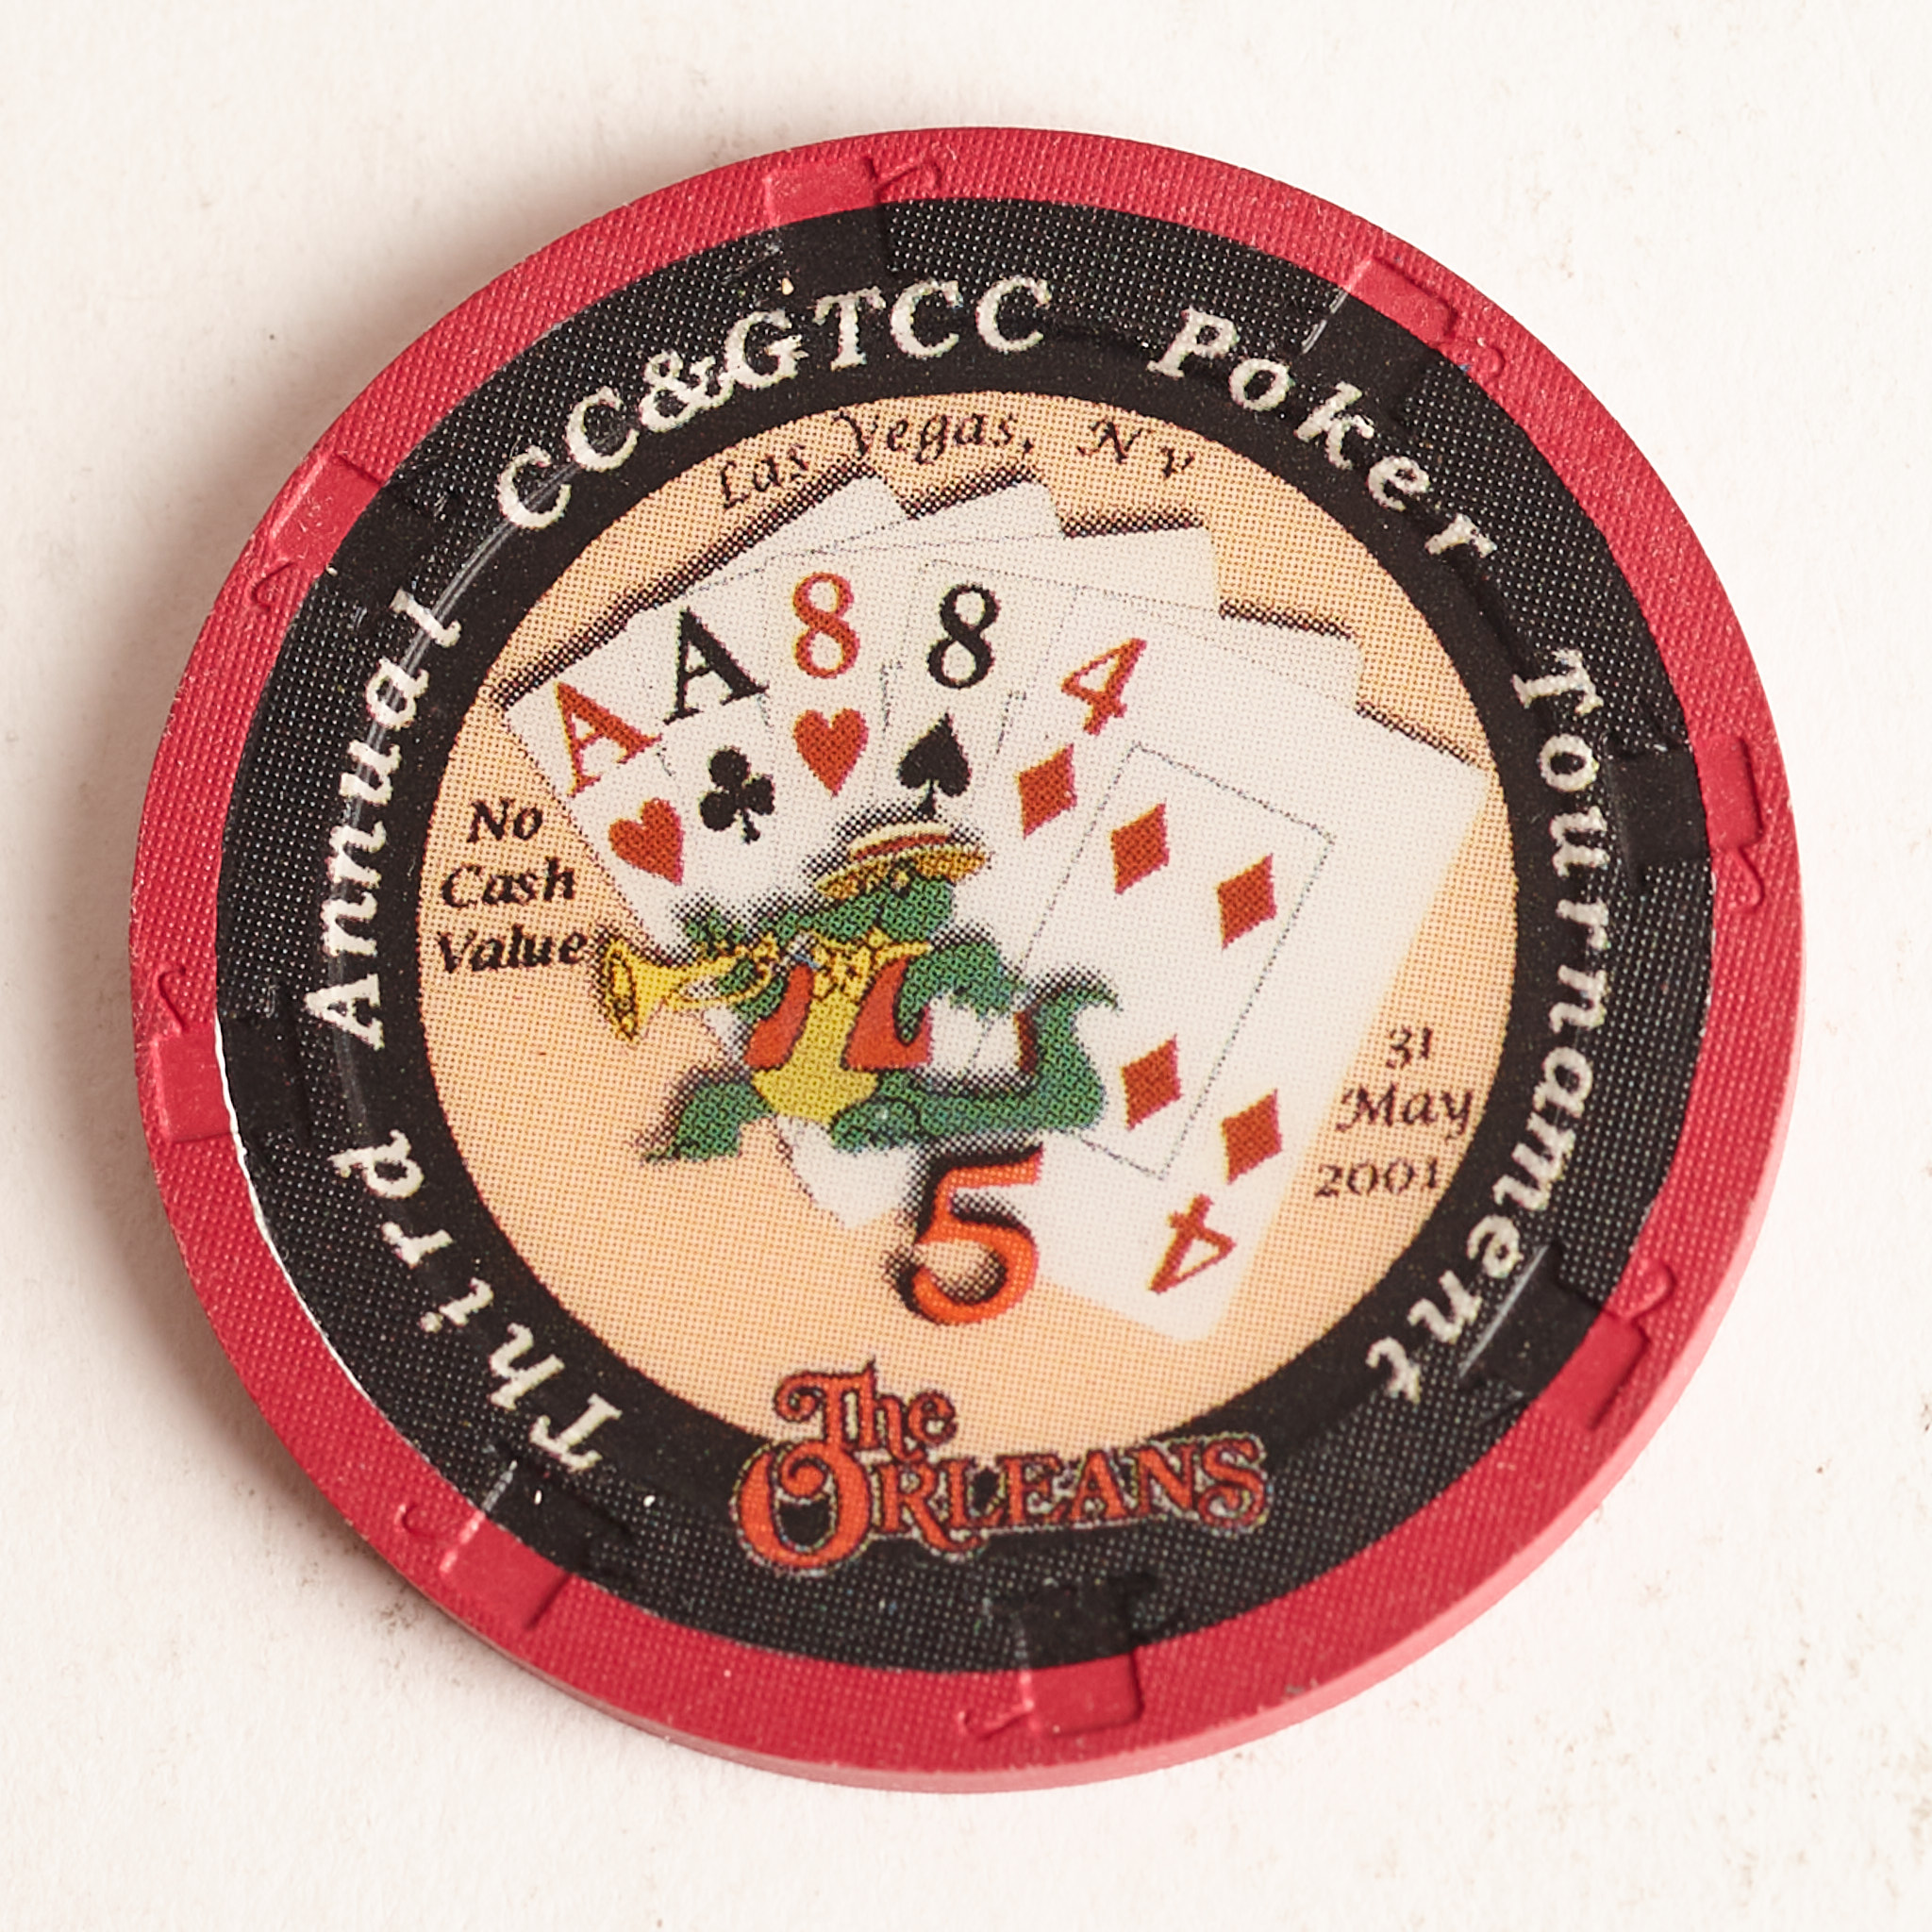 CC&GTCC 3rd ANNUAL POKER TOURNAMENT, 2001, Poker Card Guard Chip